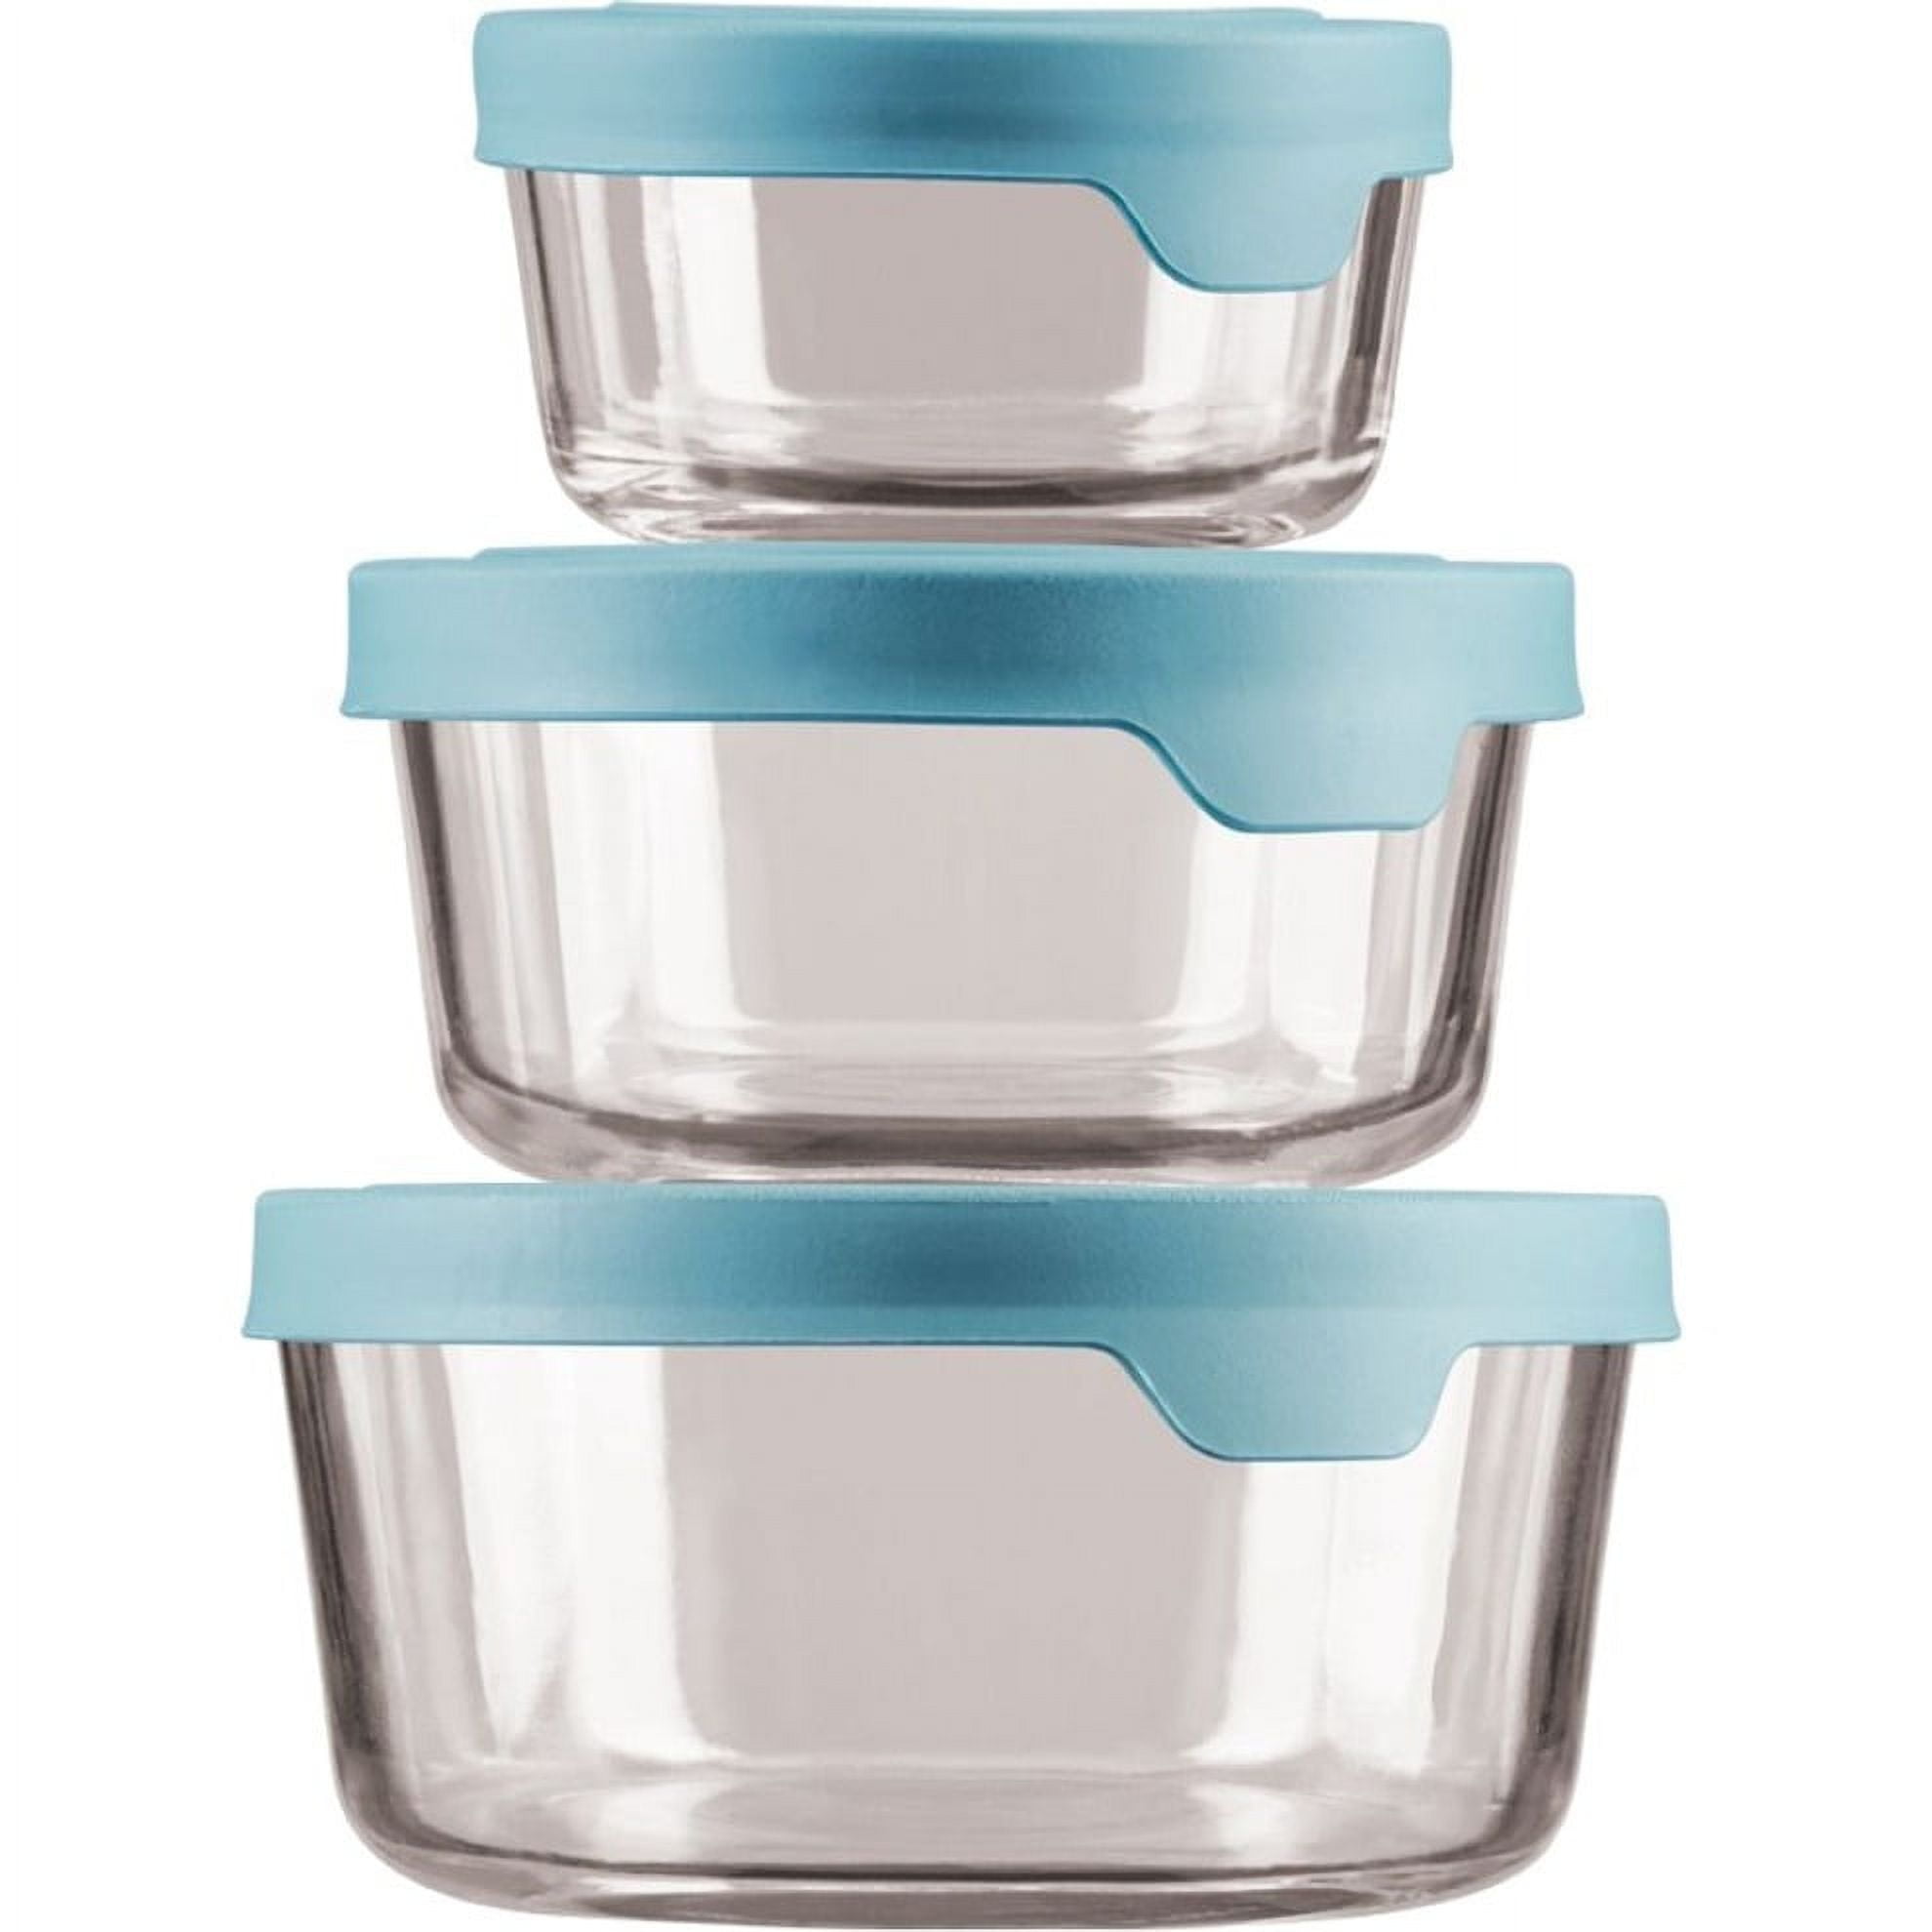 6pc 2,4,7 cup Storage w/ Blue Lids - Anchor Hocking FoodserviceAnchor  Hocking Foodservice